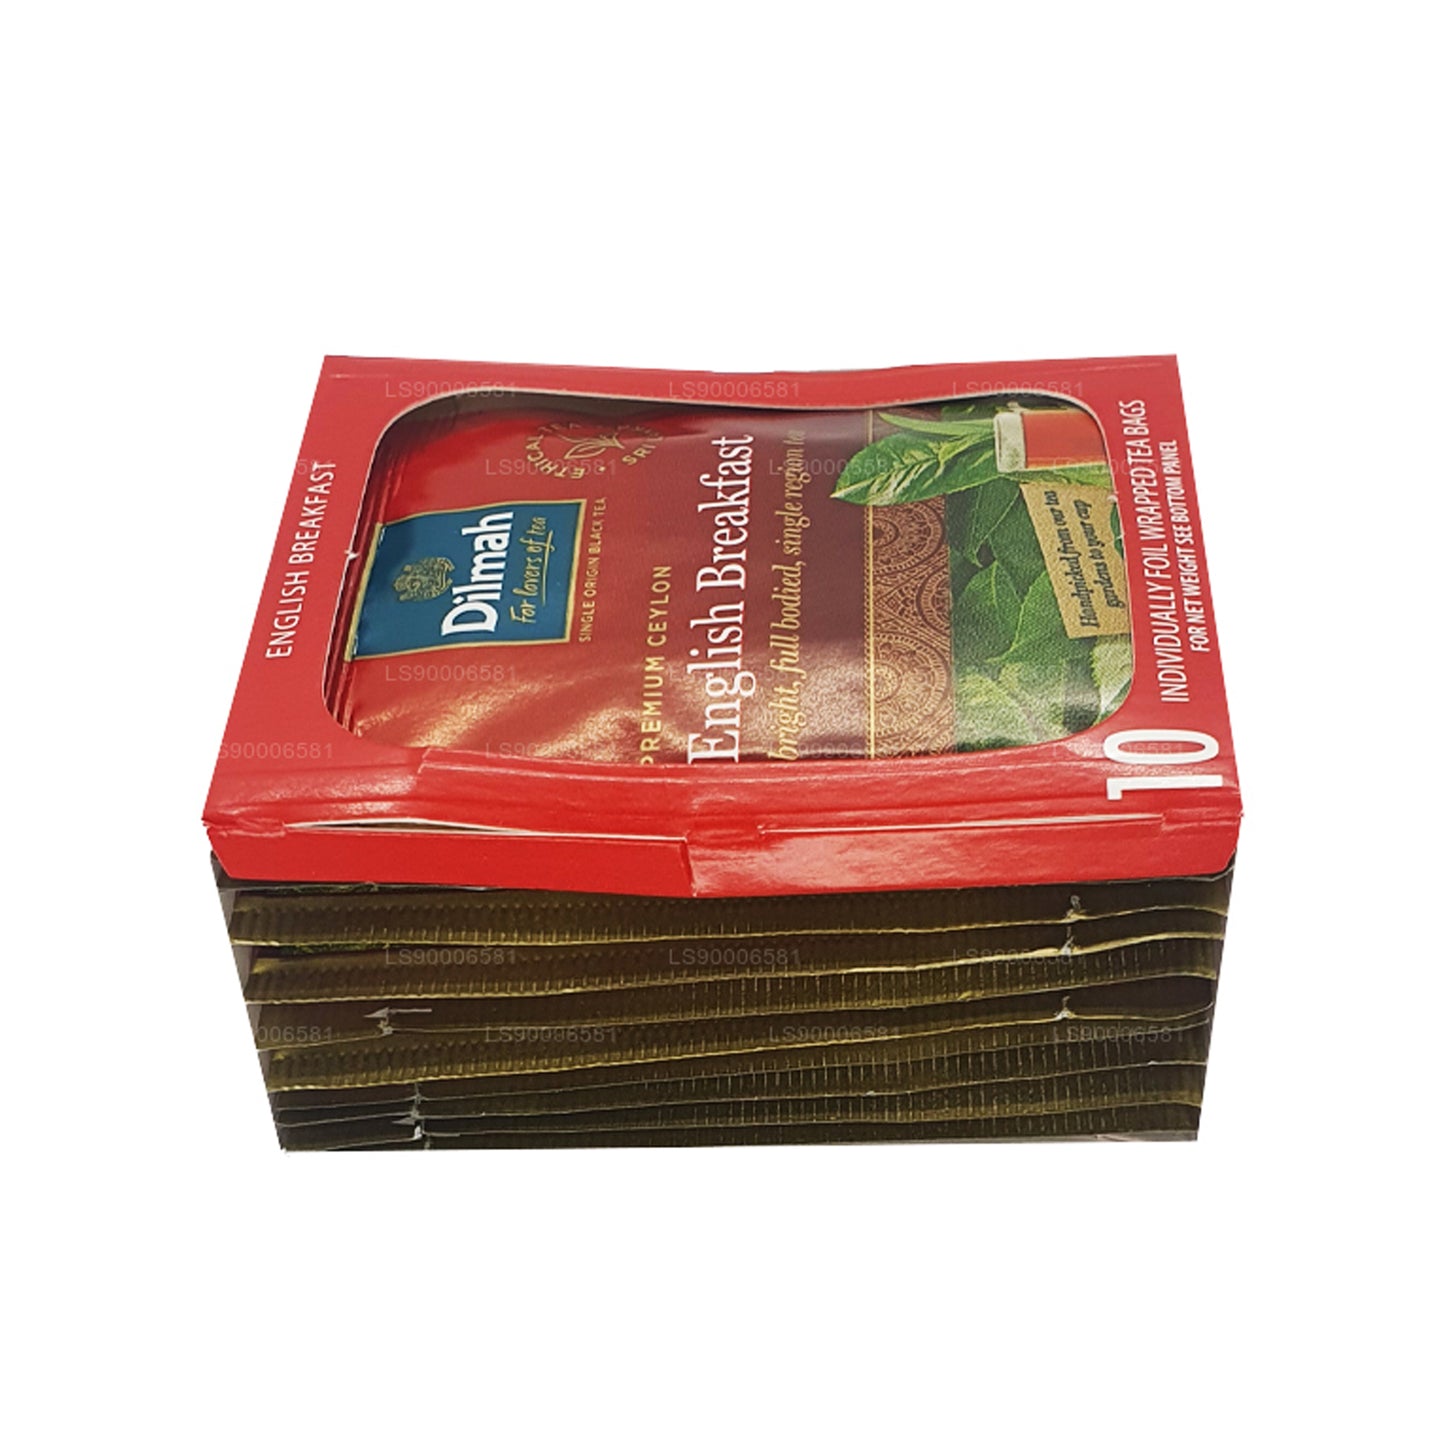 Dilmah Engelse ontbijtthee (20 g) 10 individueel in folie verpakte theezakjes